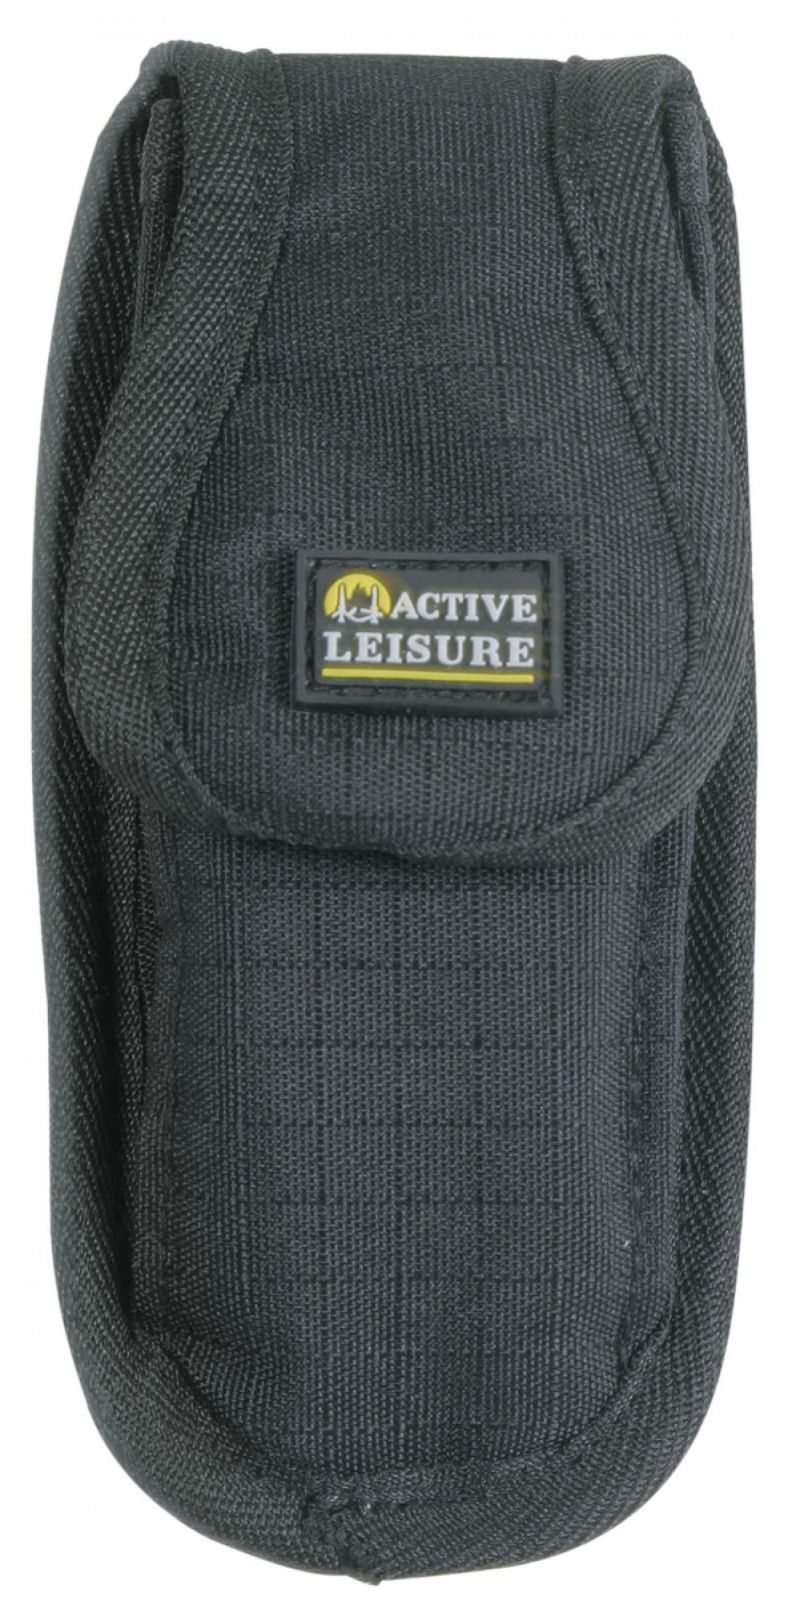 Active Leisure Sunglass Pocket Black